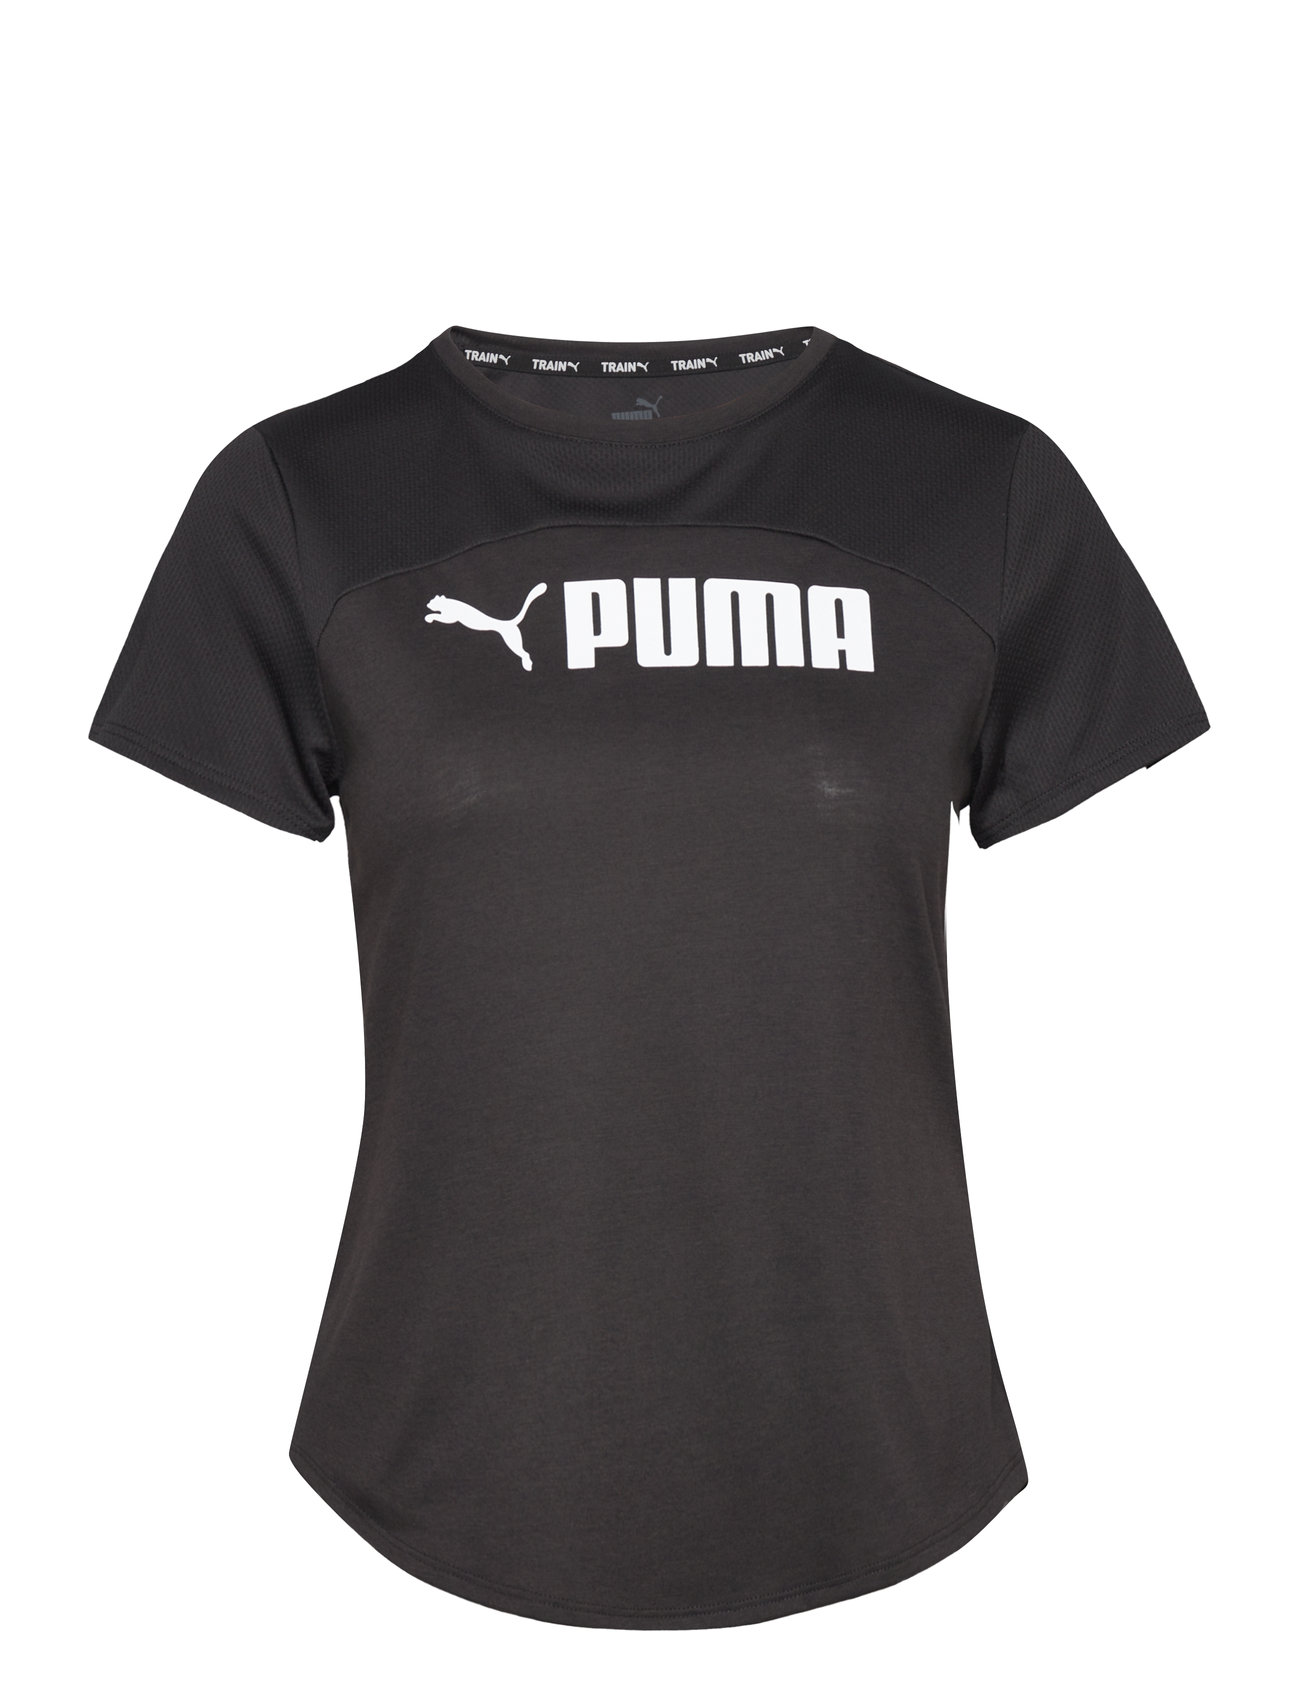 PUMA Puma Fit Tee – t-shirts verslaðu á Ultrabreathe – tops & Logo Booztlet